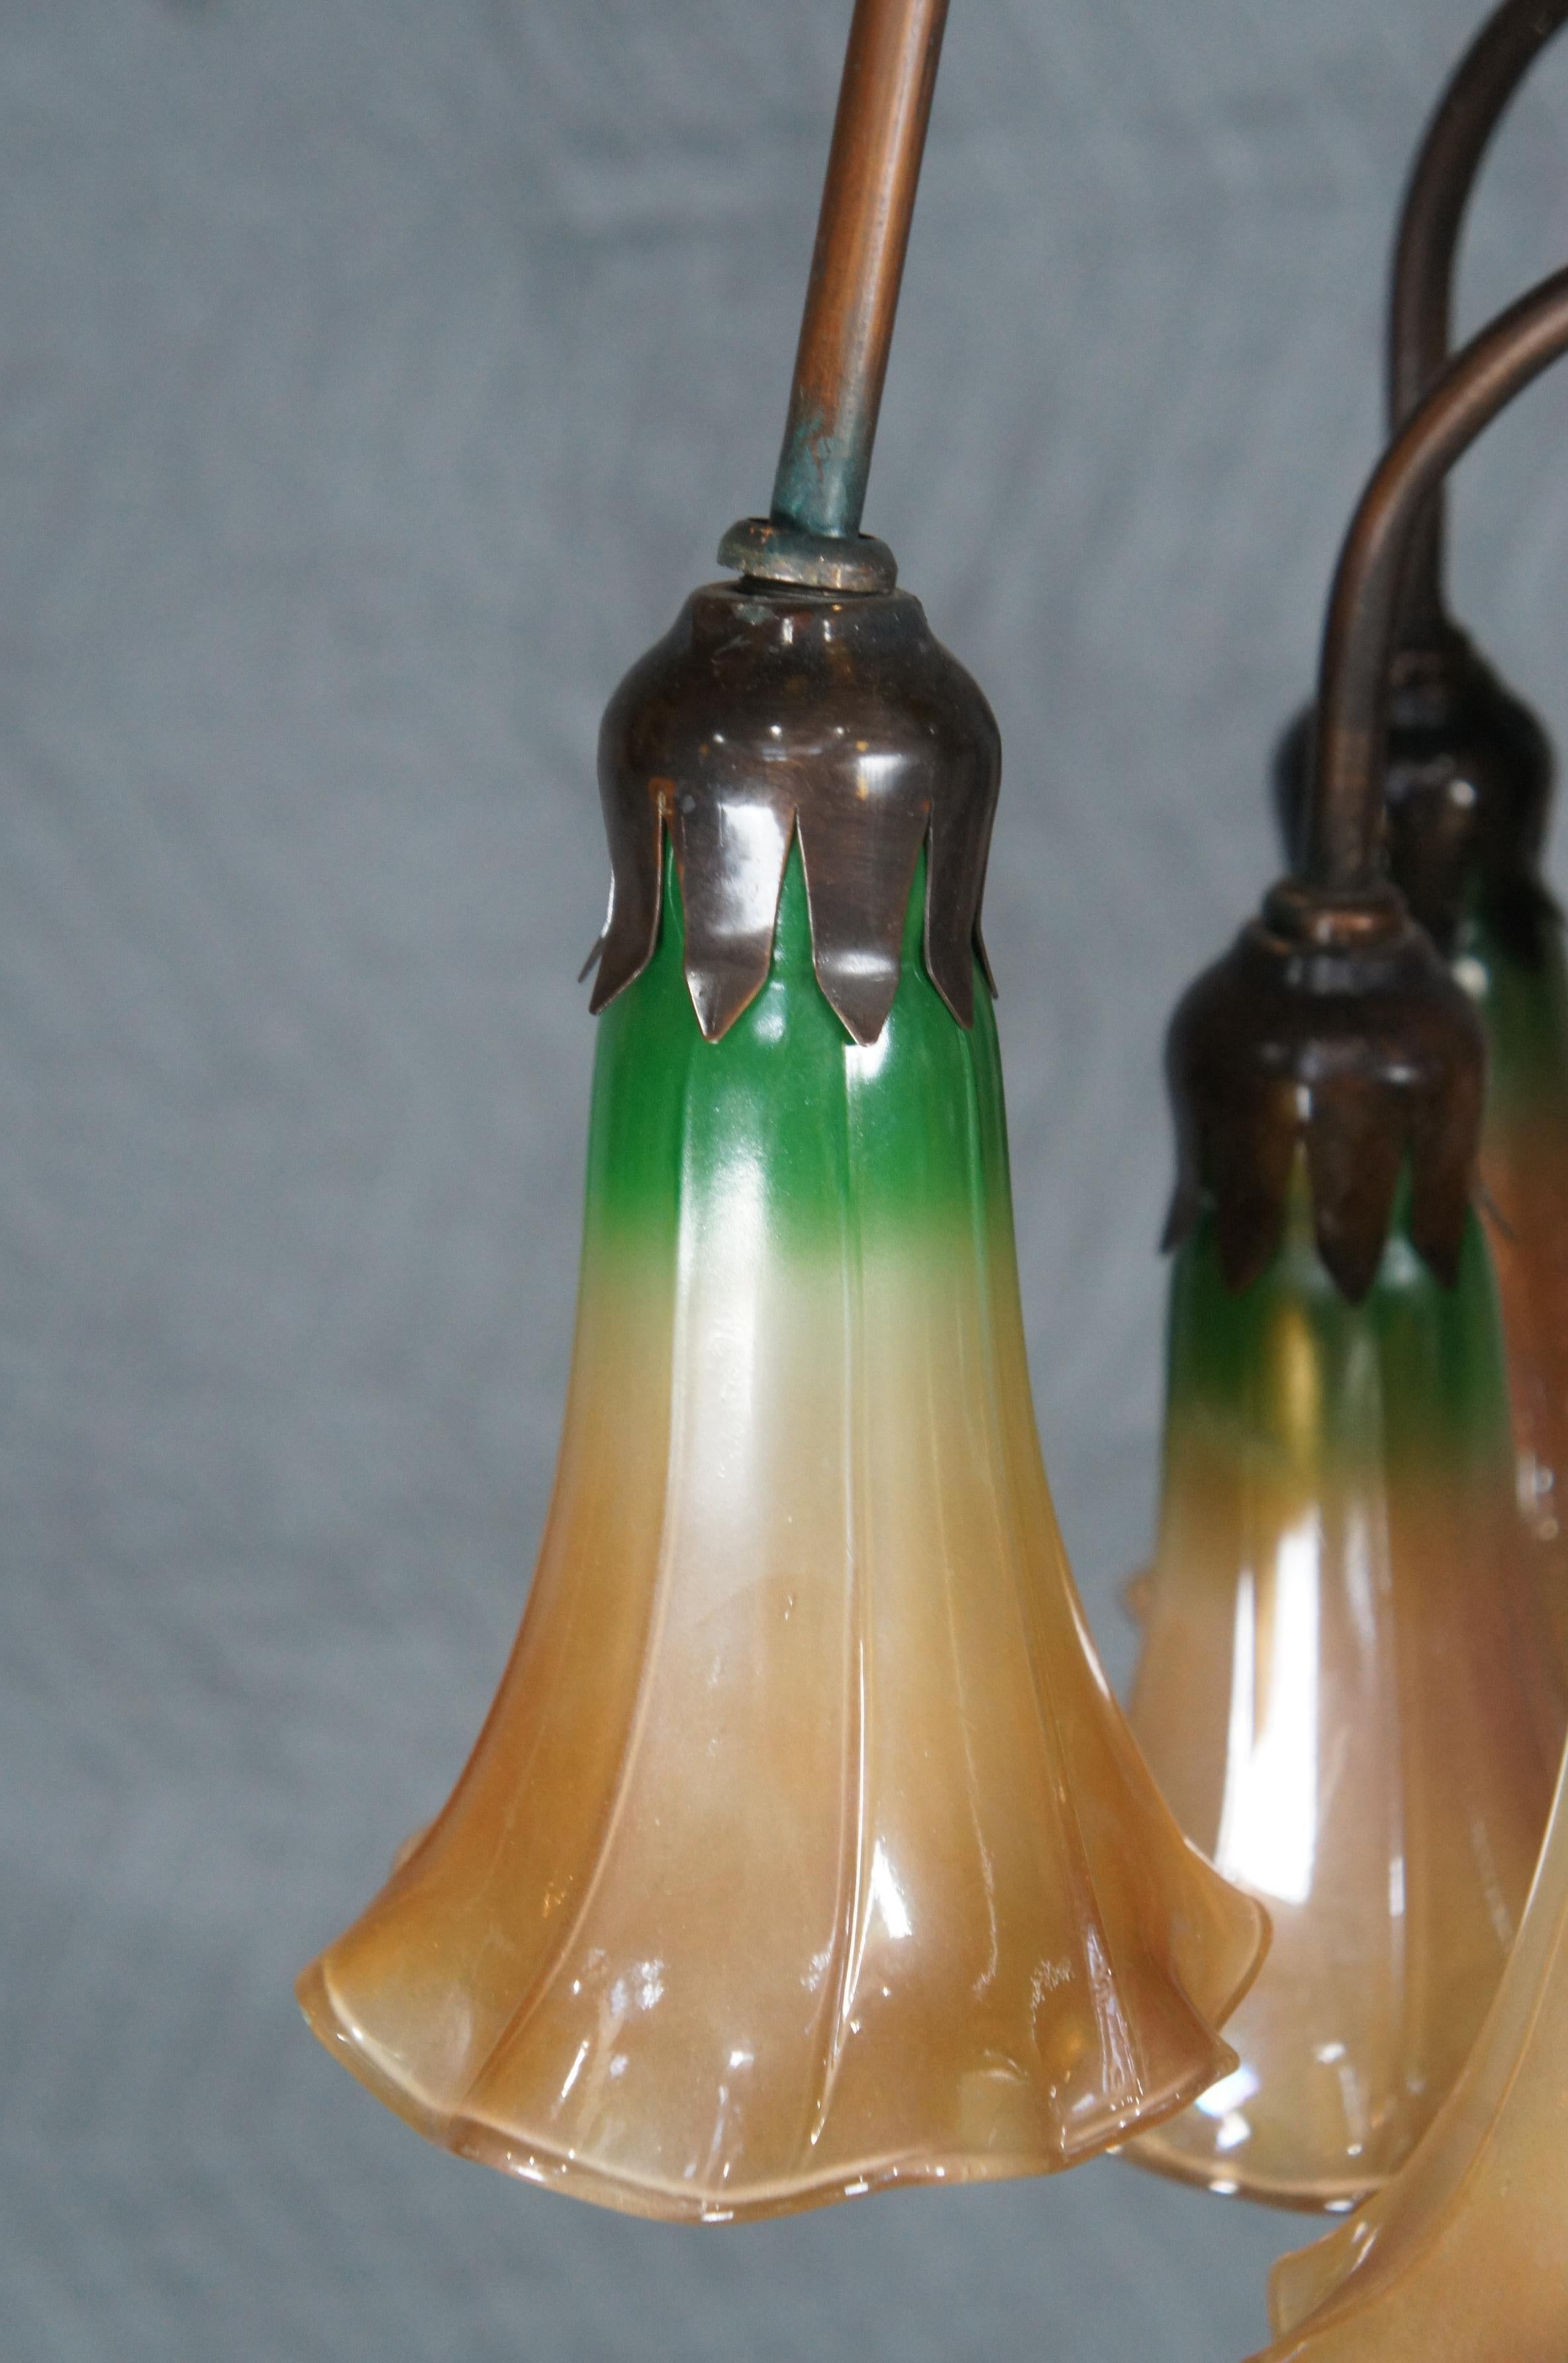 Tiffany Style Bronze Art Nouveau 12 Arm Lily Pad Tulip Floor lamp 54